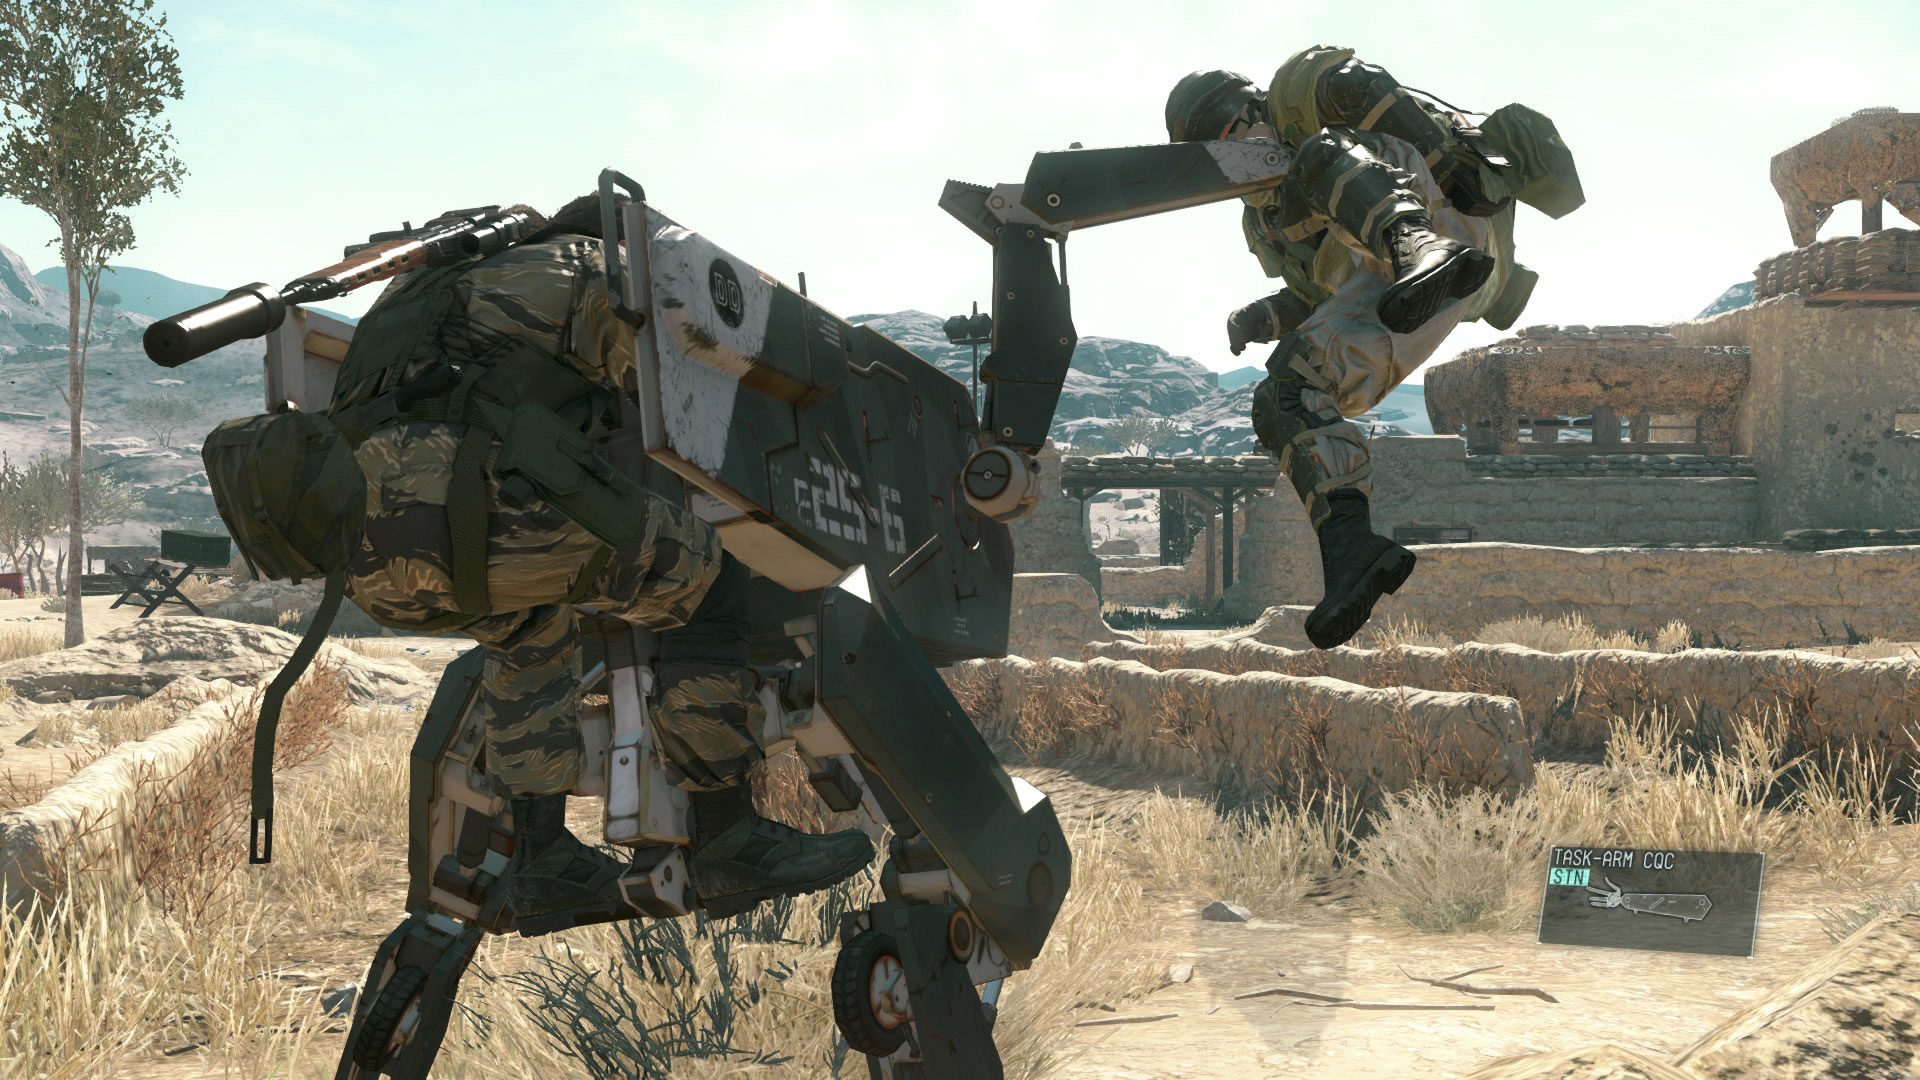 Metal-Gear-Solid-V-The-Phantom-Pain-E3-2015-Screen-Big-Boss-D-Walker-3